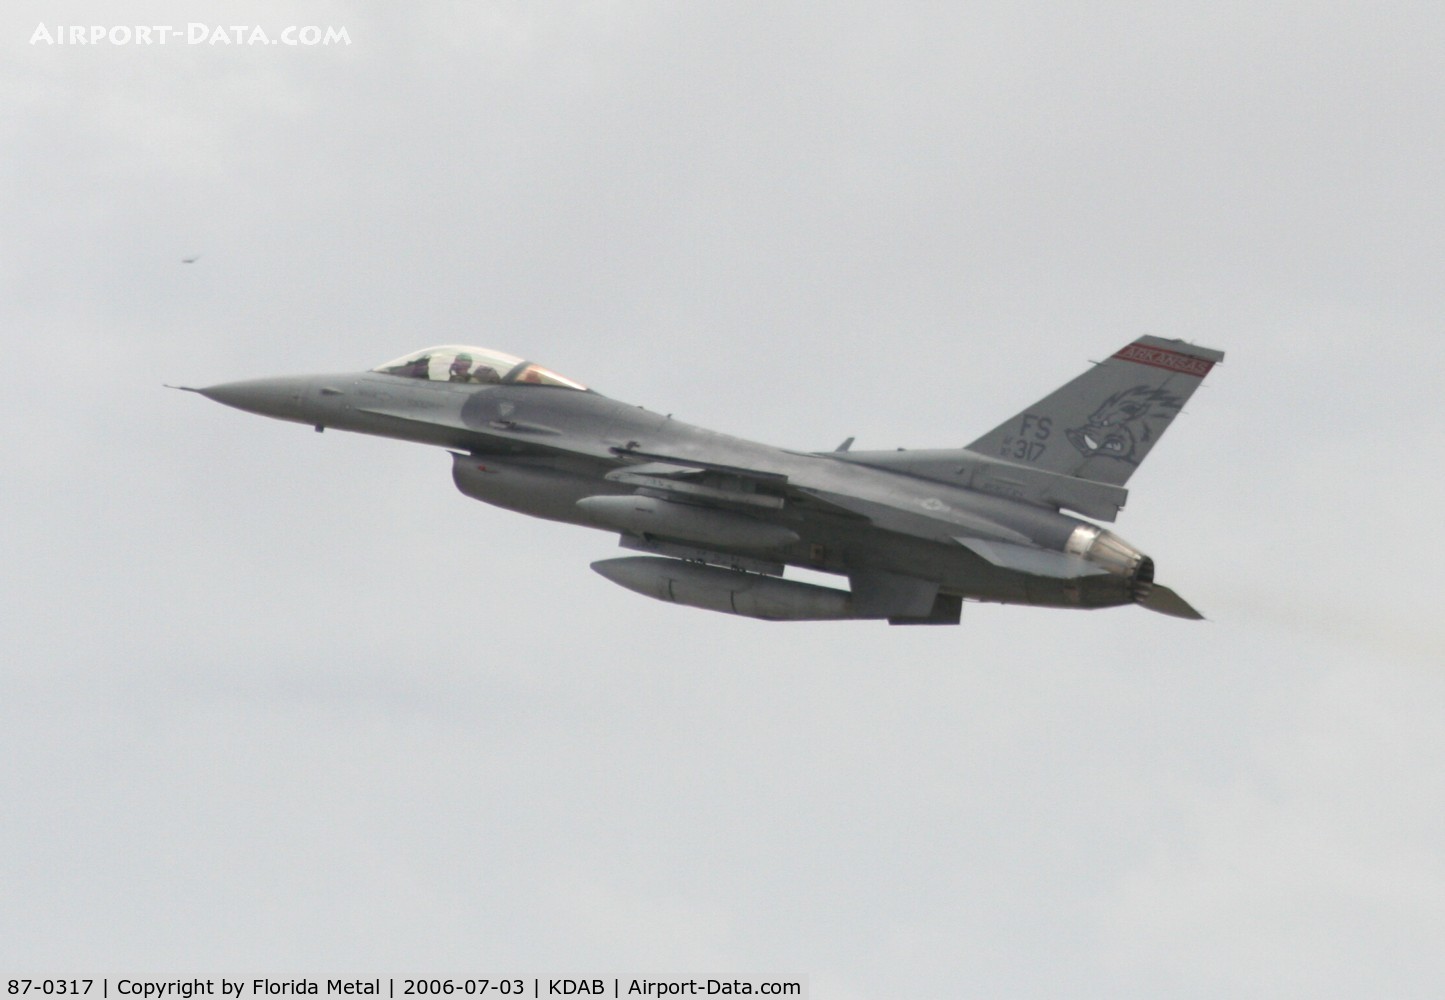 87-0317, 1987 General Dynamics F-16C Fighting Falcon C/N 5C-578, DAB zx